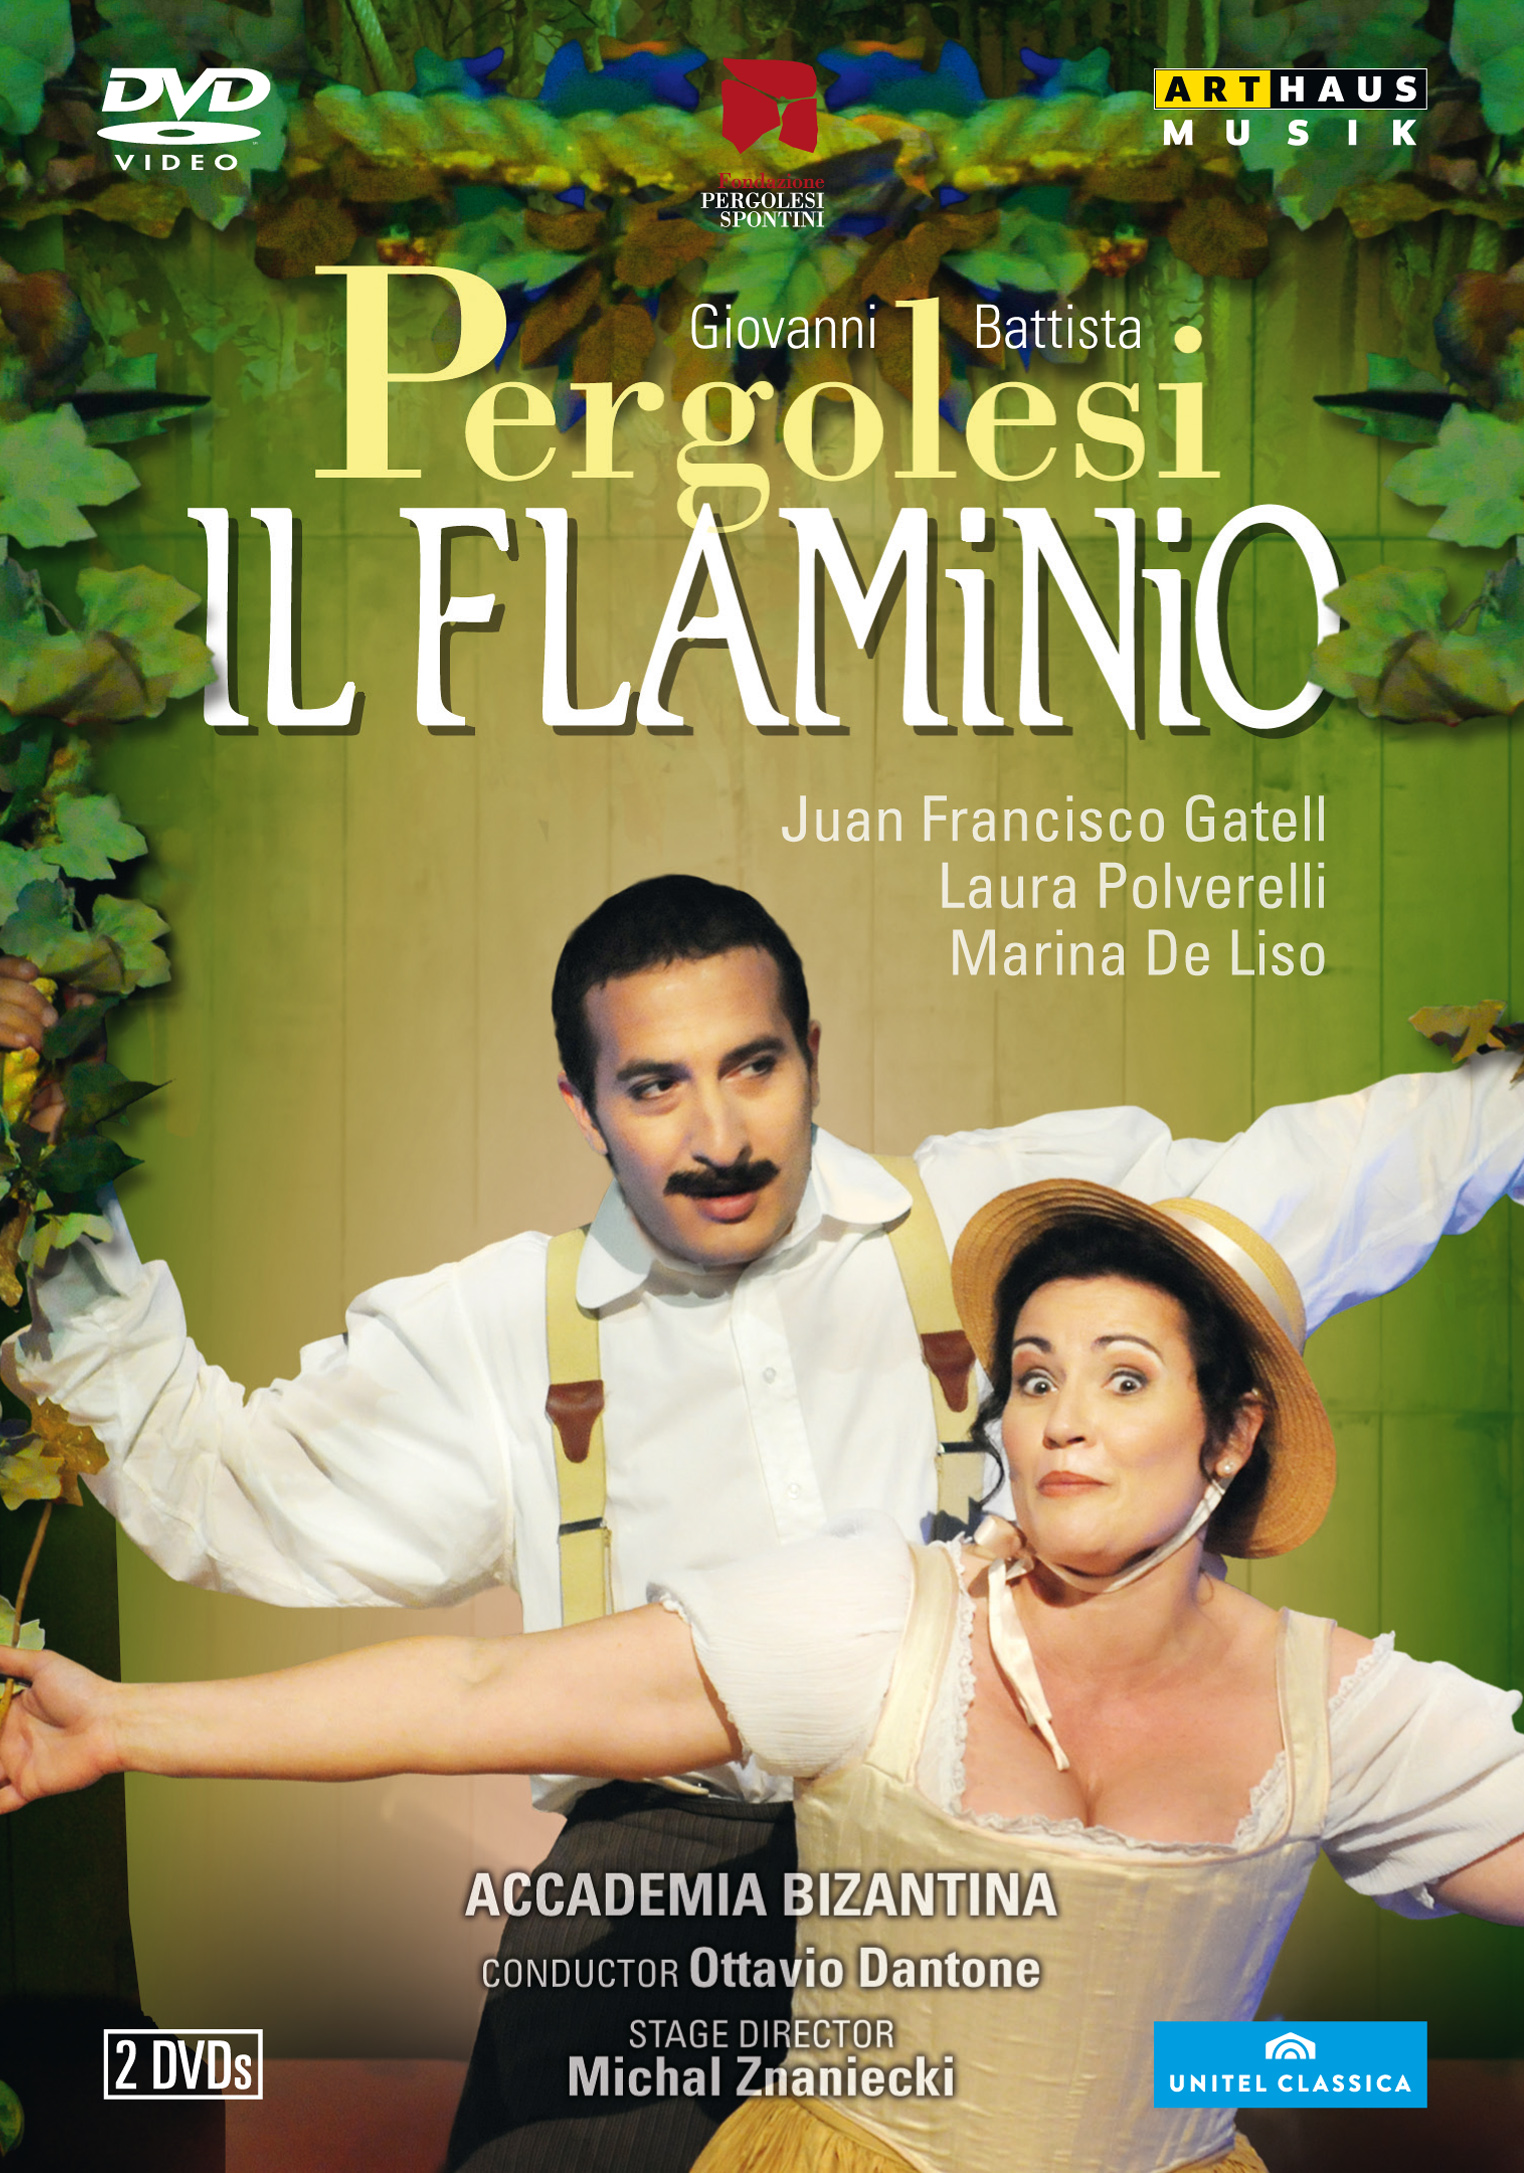 DVD Pergolesi - Il flaminio - Juan Francisco Gatell, Laura Polverelli, Marina De Liso